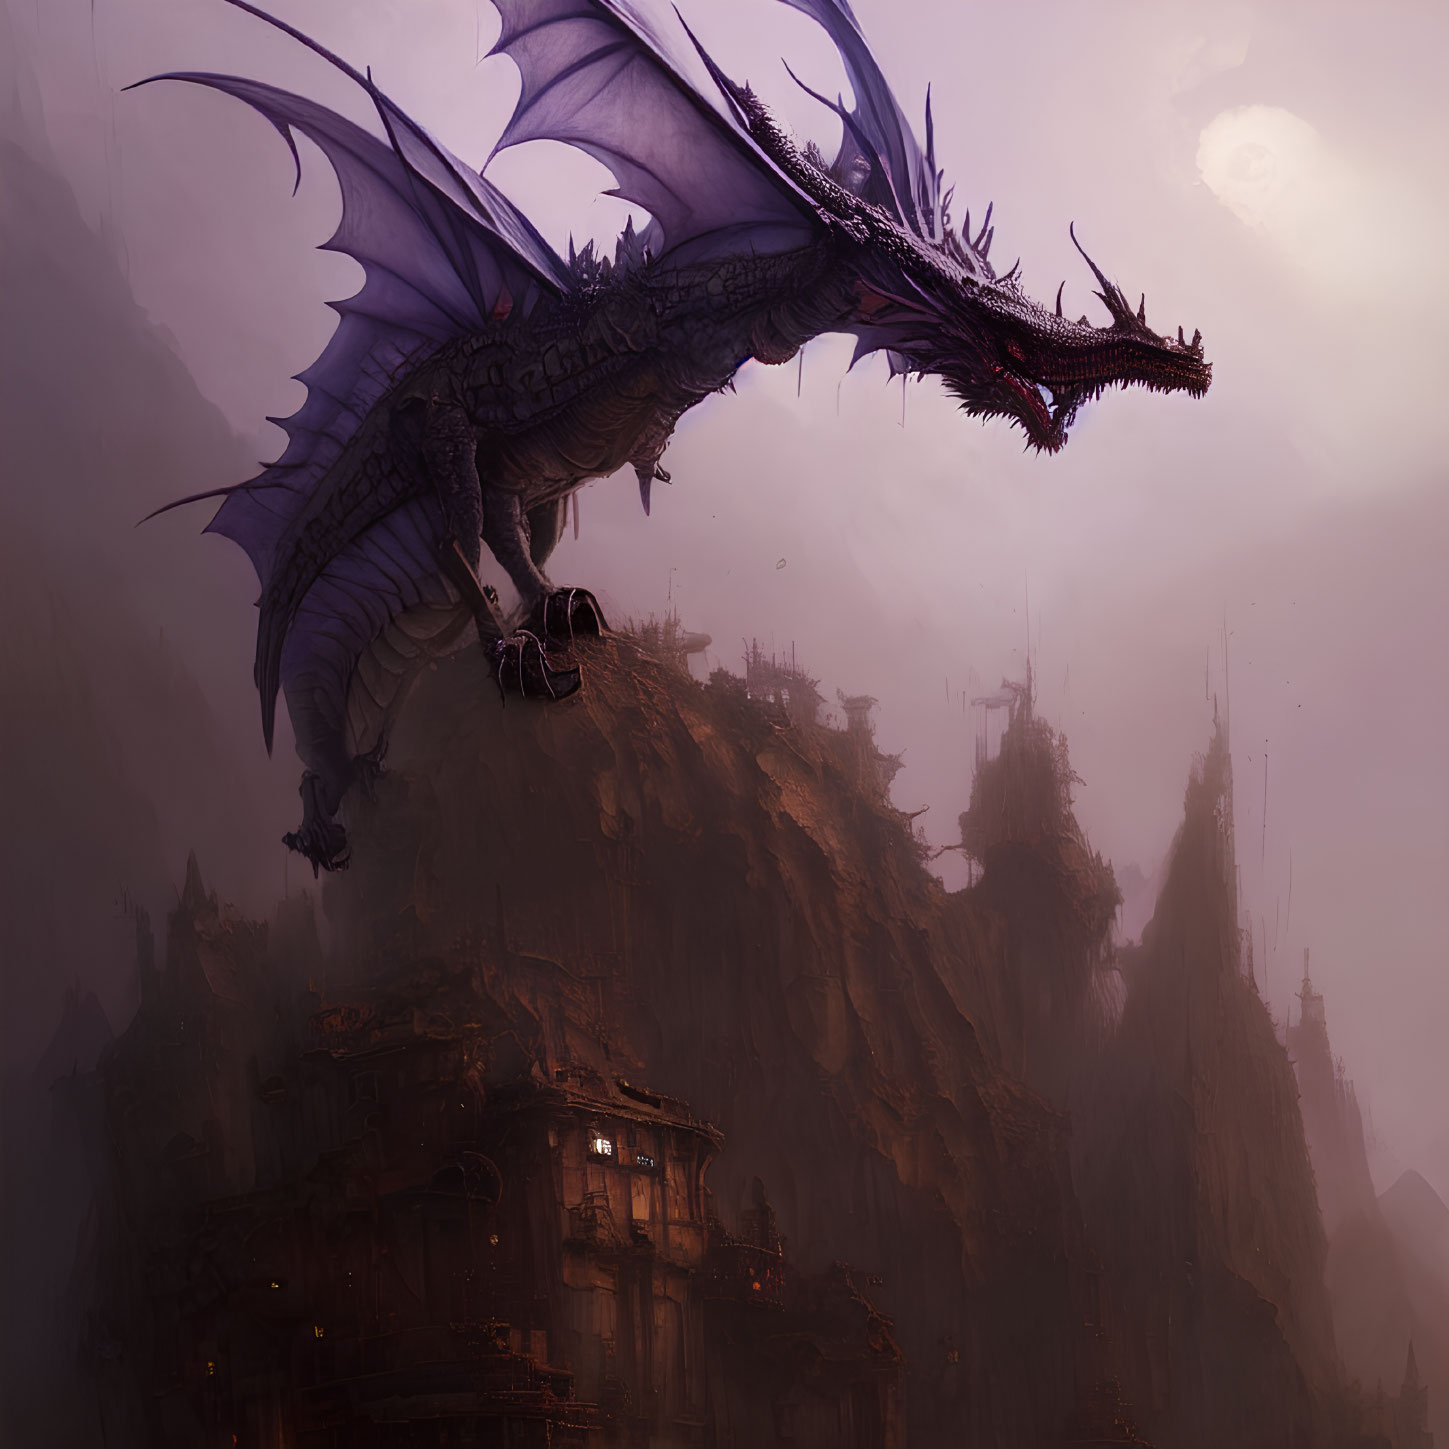 Majestic dragon flying over misty fantasy cityscape at dusk